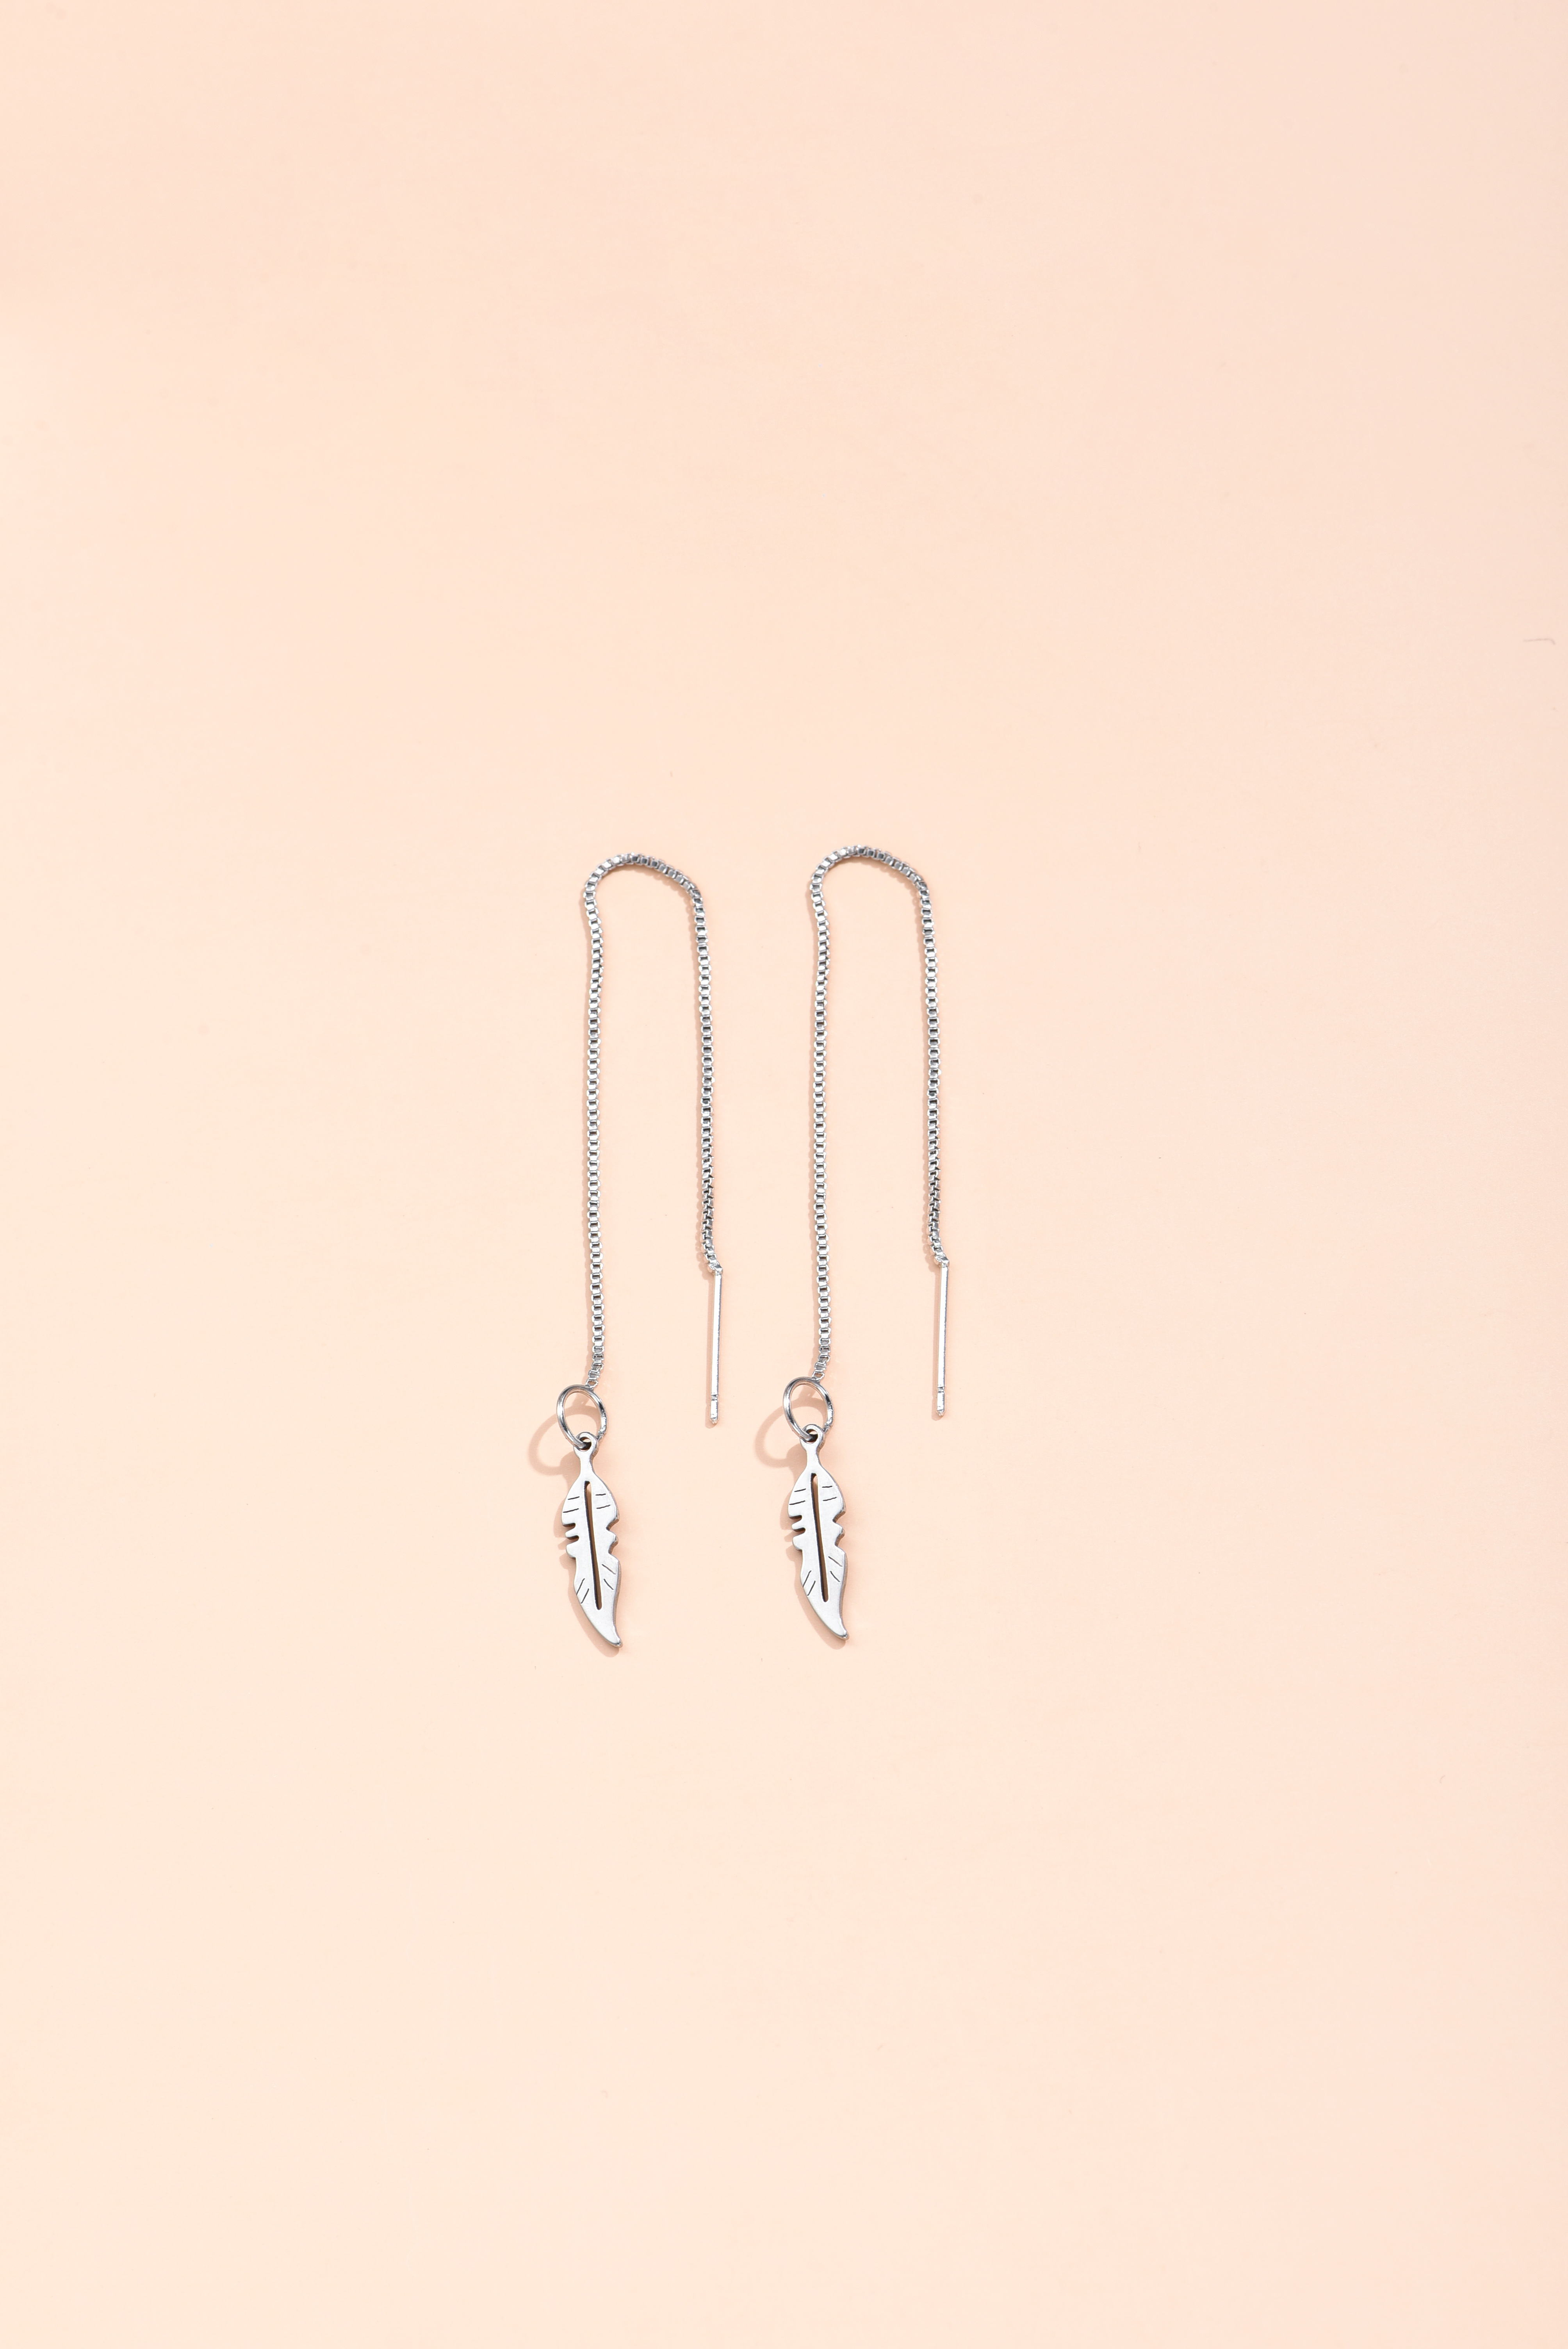 10 pcs - Leaf Threader Drop Dangling Earrings Silver Plated|GCJ391|UK SELLER